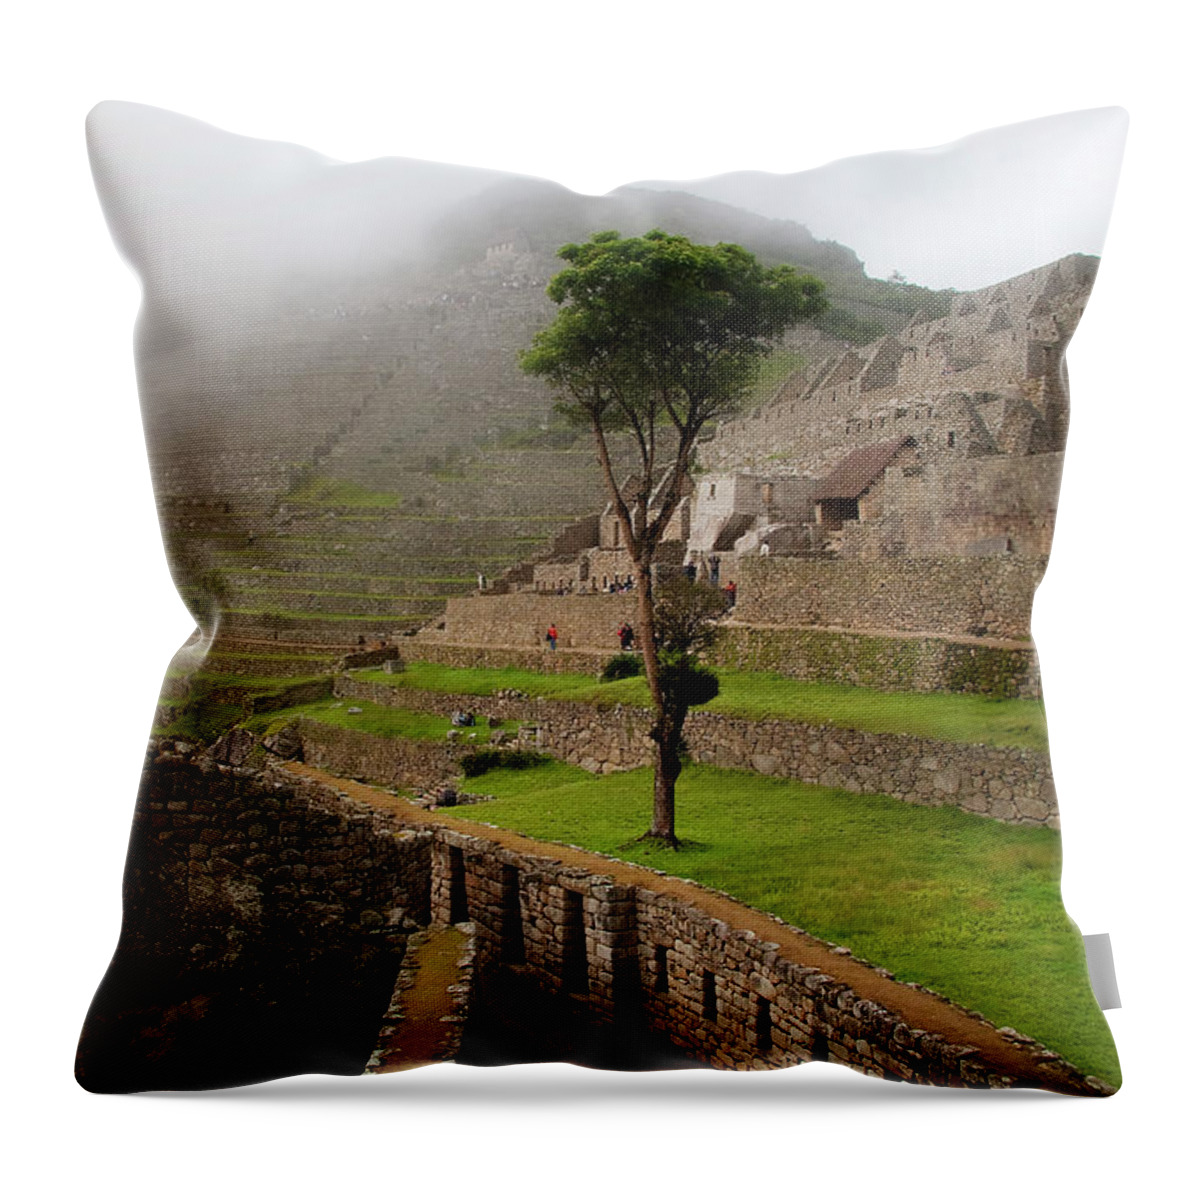 Tranquility Throw Pillow featuring the photograph Macchu Picchu by Agnieszka Lawniczek